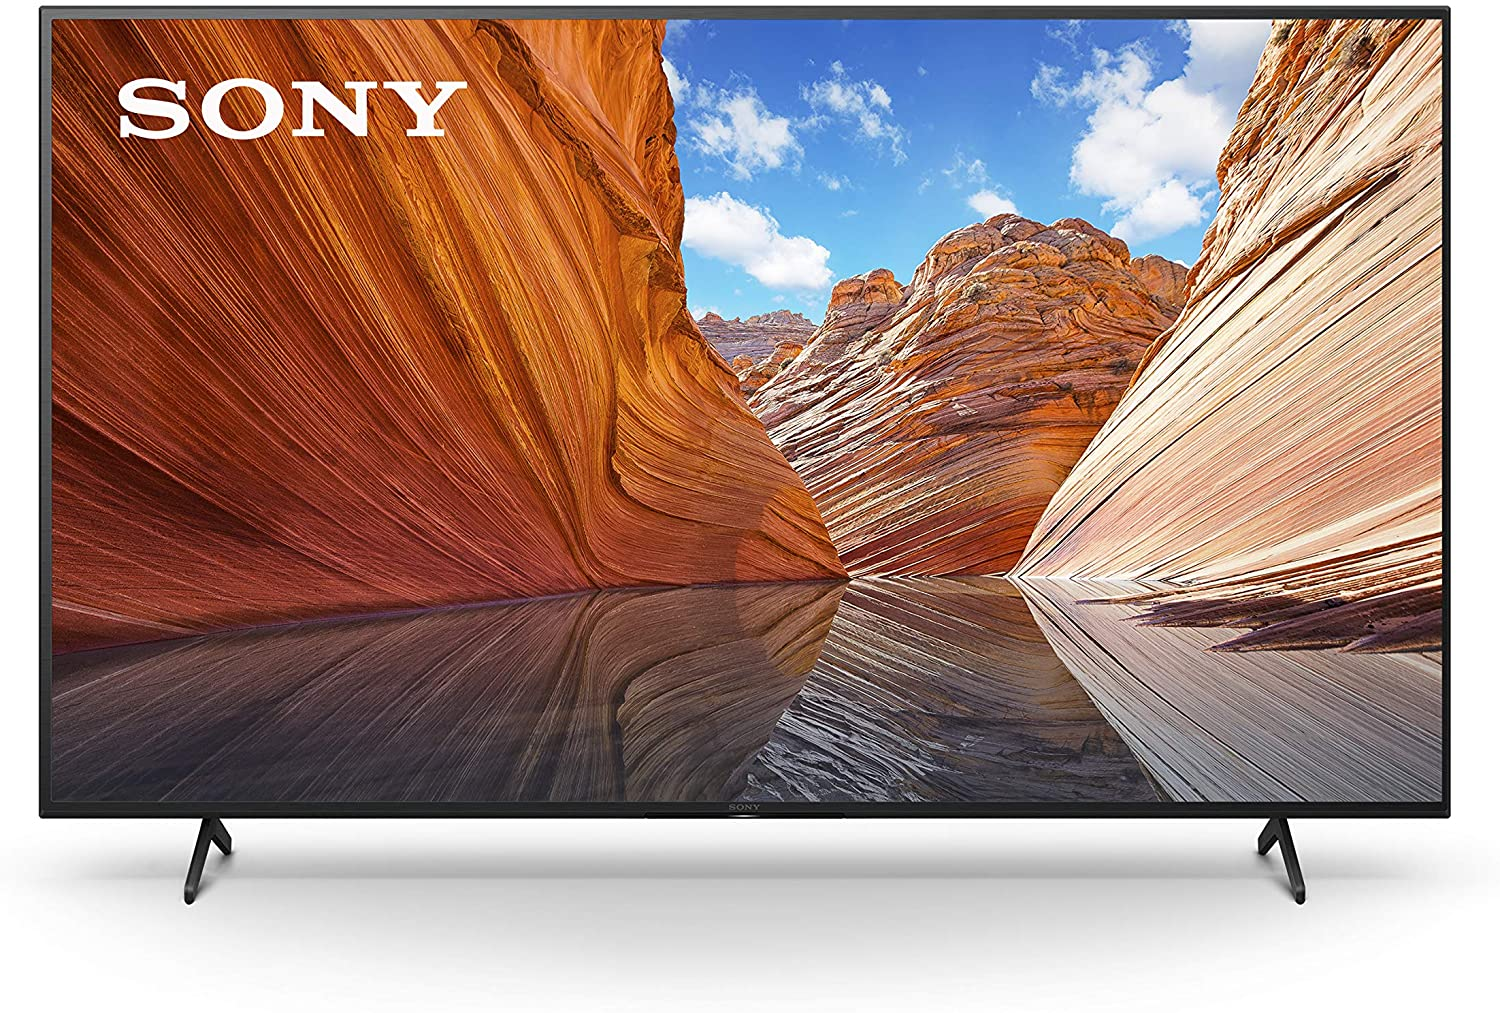 Amazon.com: Sony X80J 75 Inch TV: $349 off coupon $1349.99